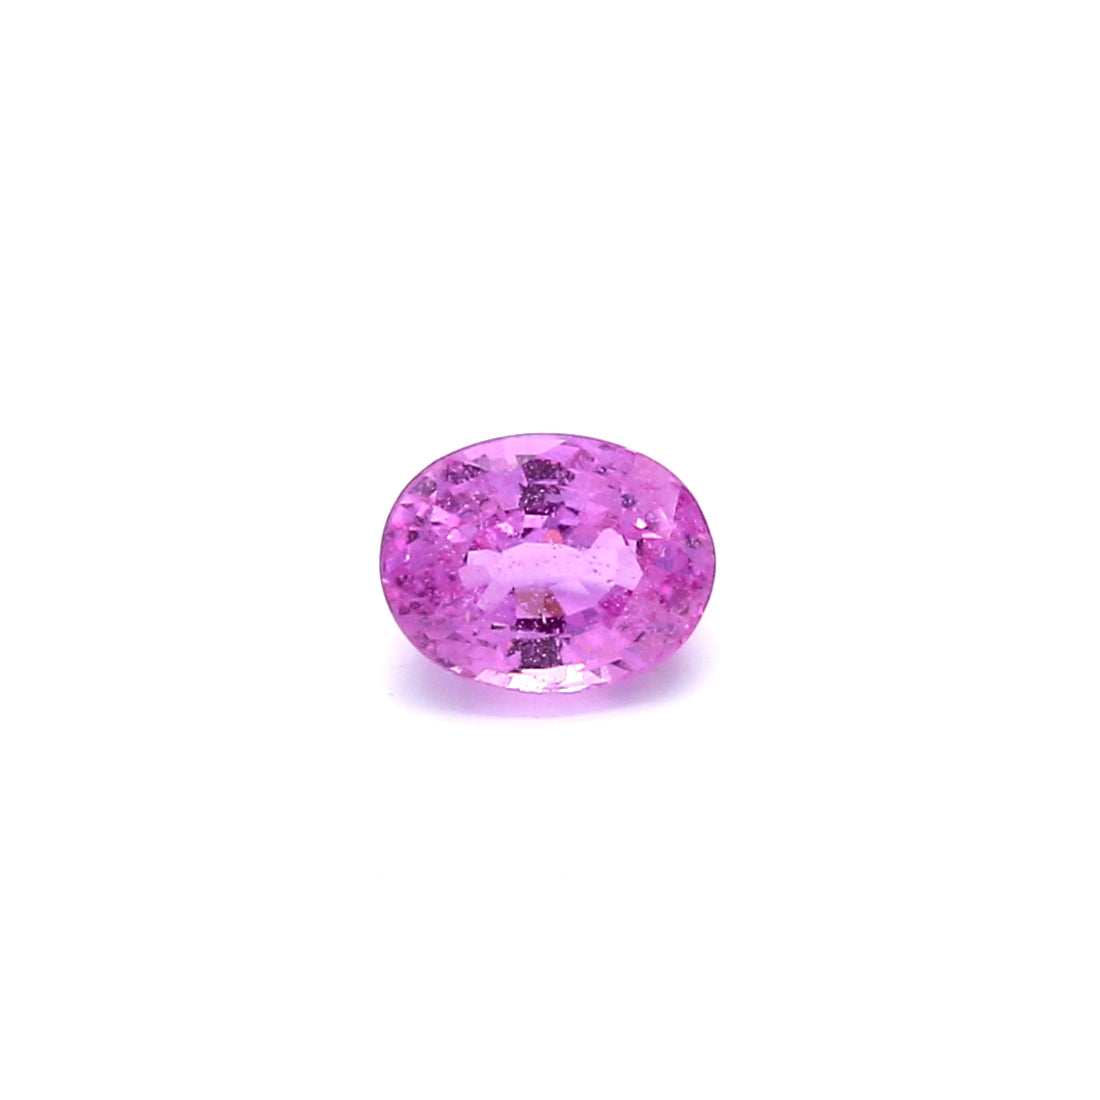 0.78ct Purplish Pink, Oval Sapphire, Heated, Madagascar - 5.87 x 4.51 x 3.23mm